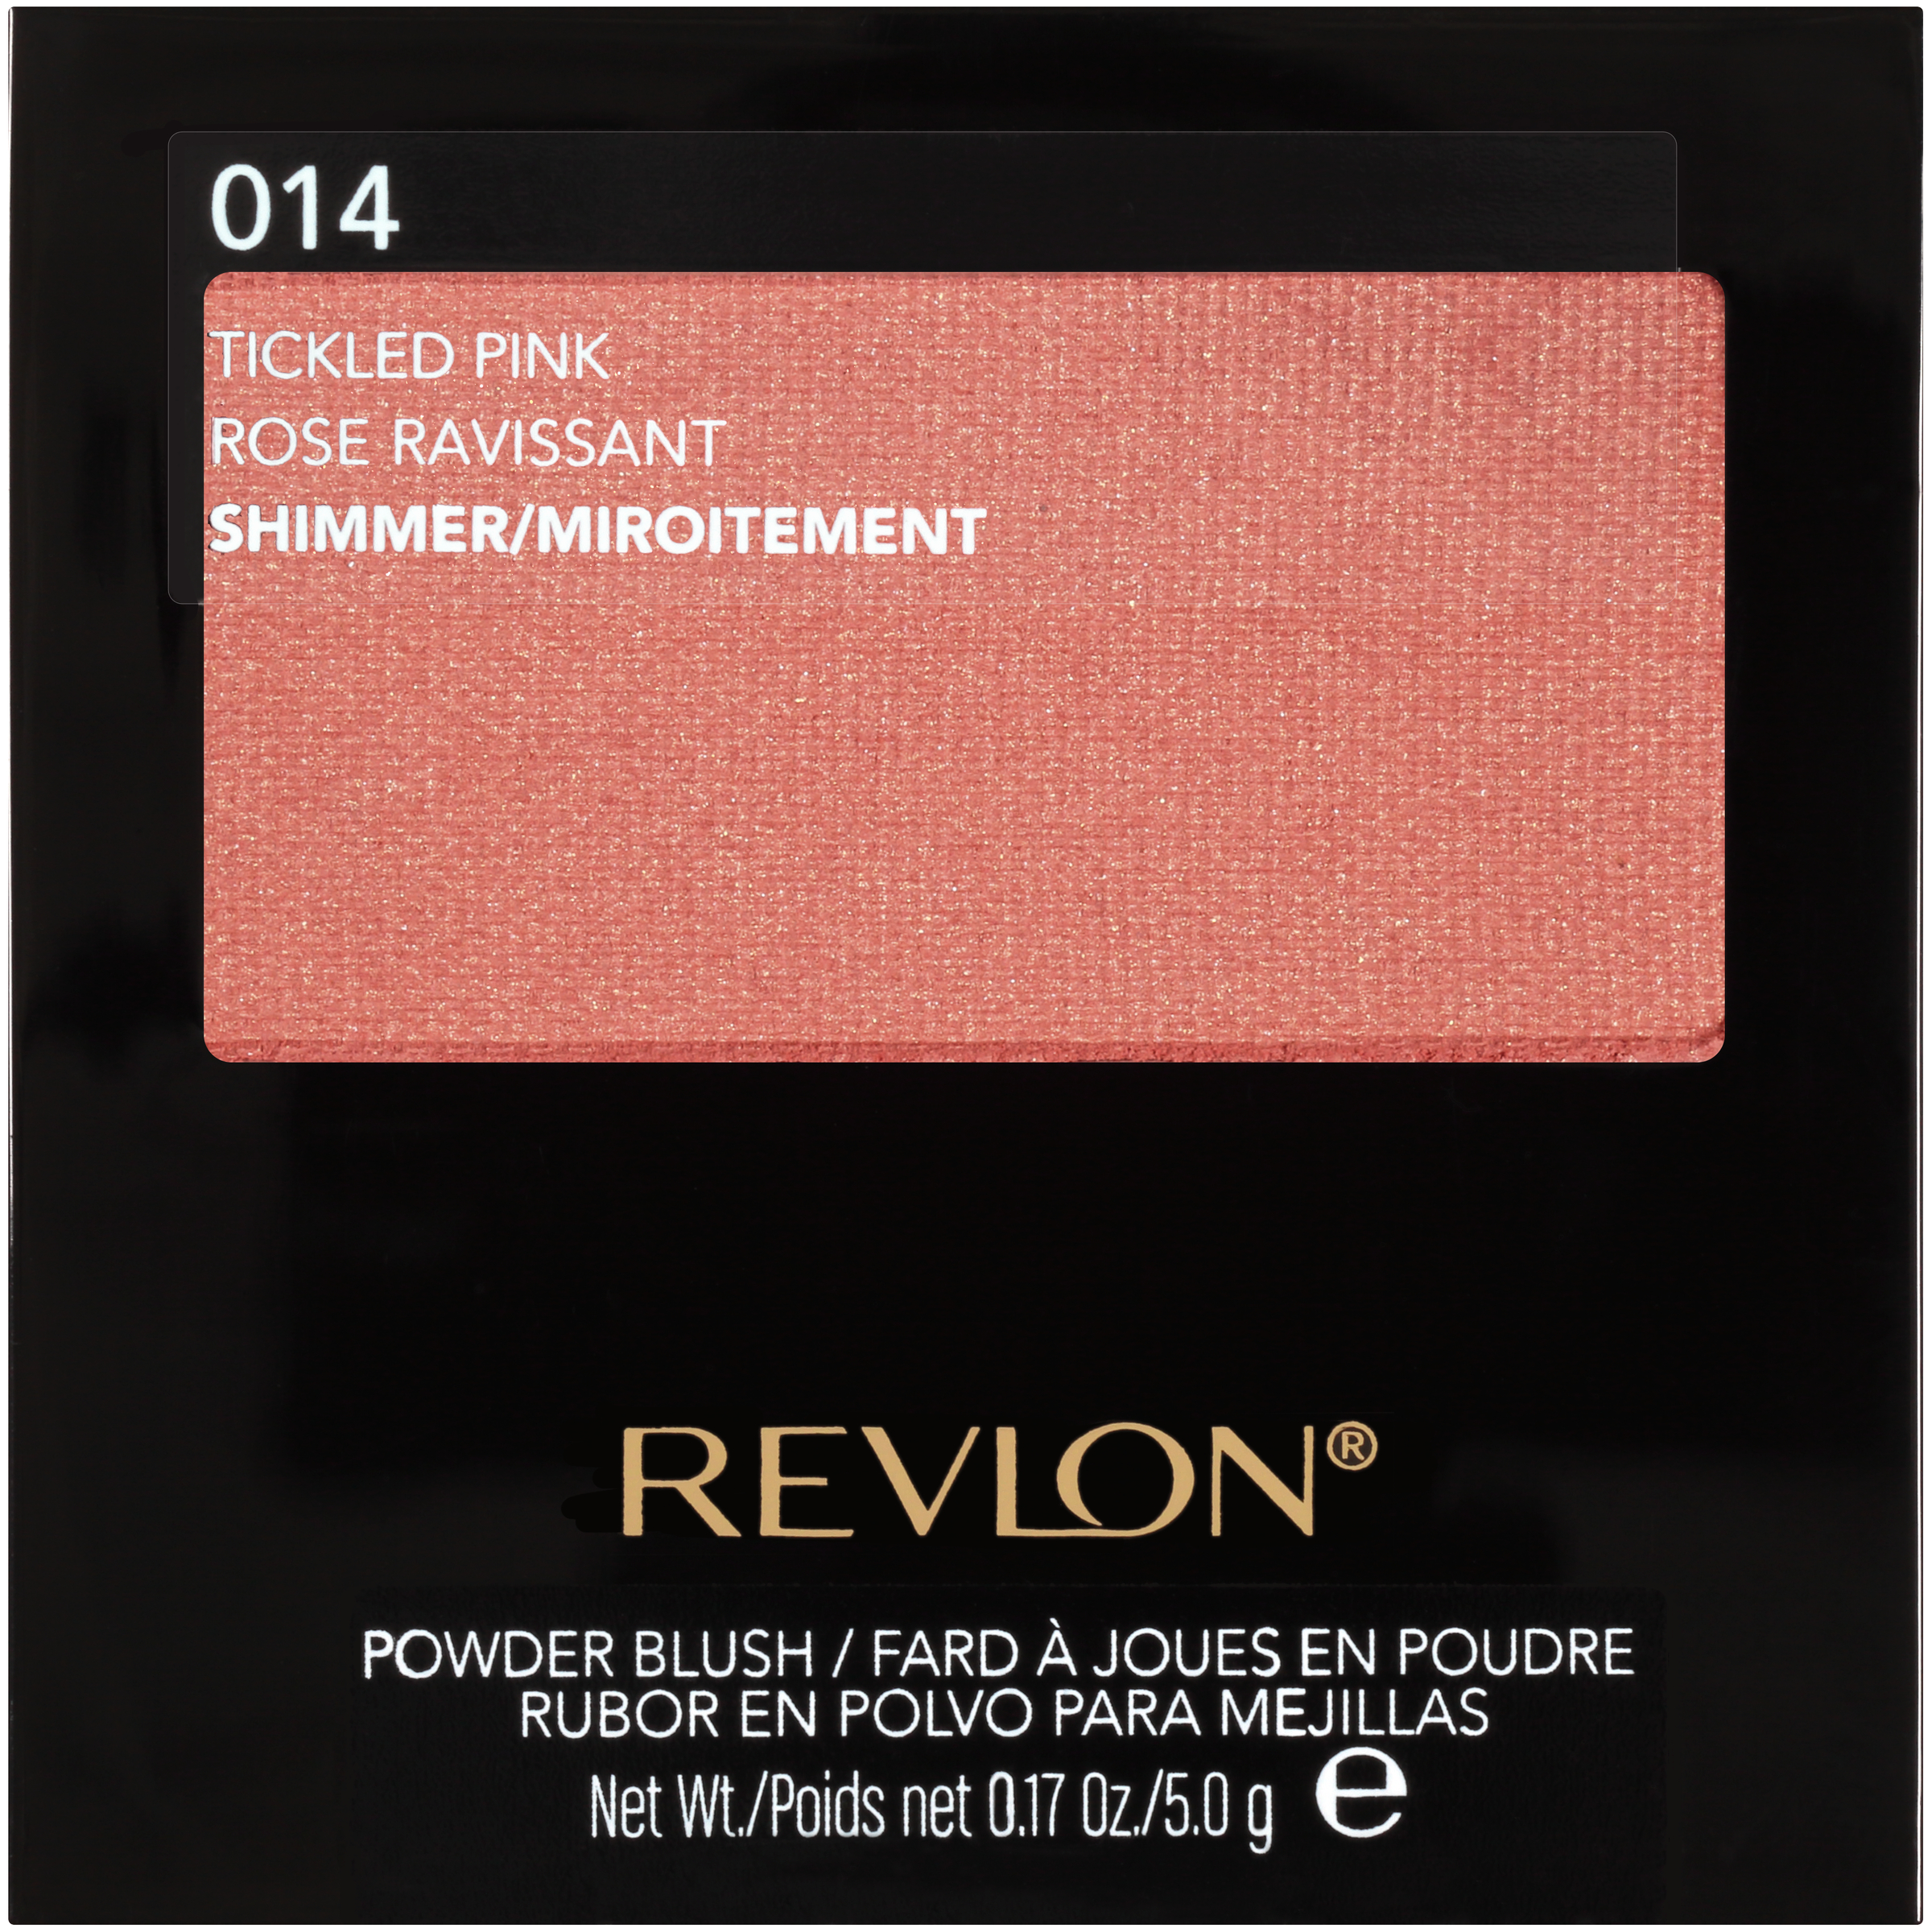 Revlon &#174; Powder Blush 014 Tickled Pink 0.17 oz. Compact